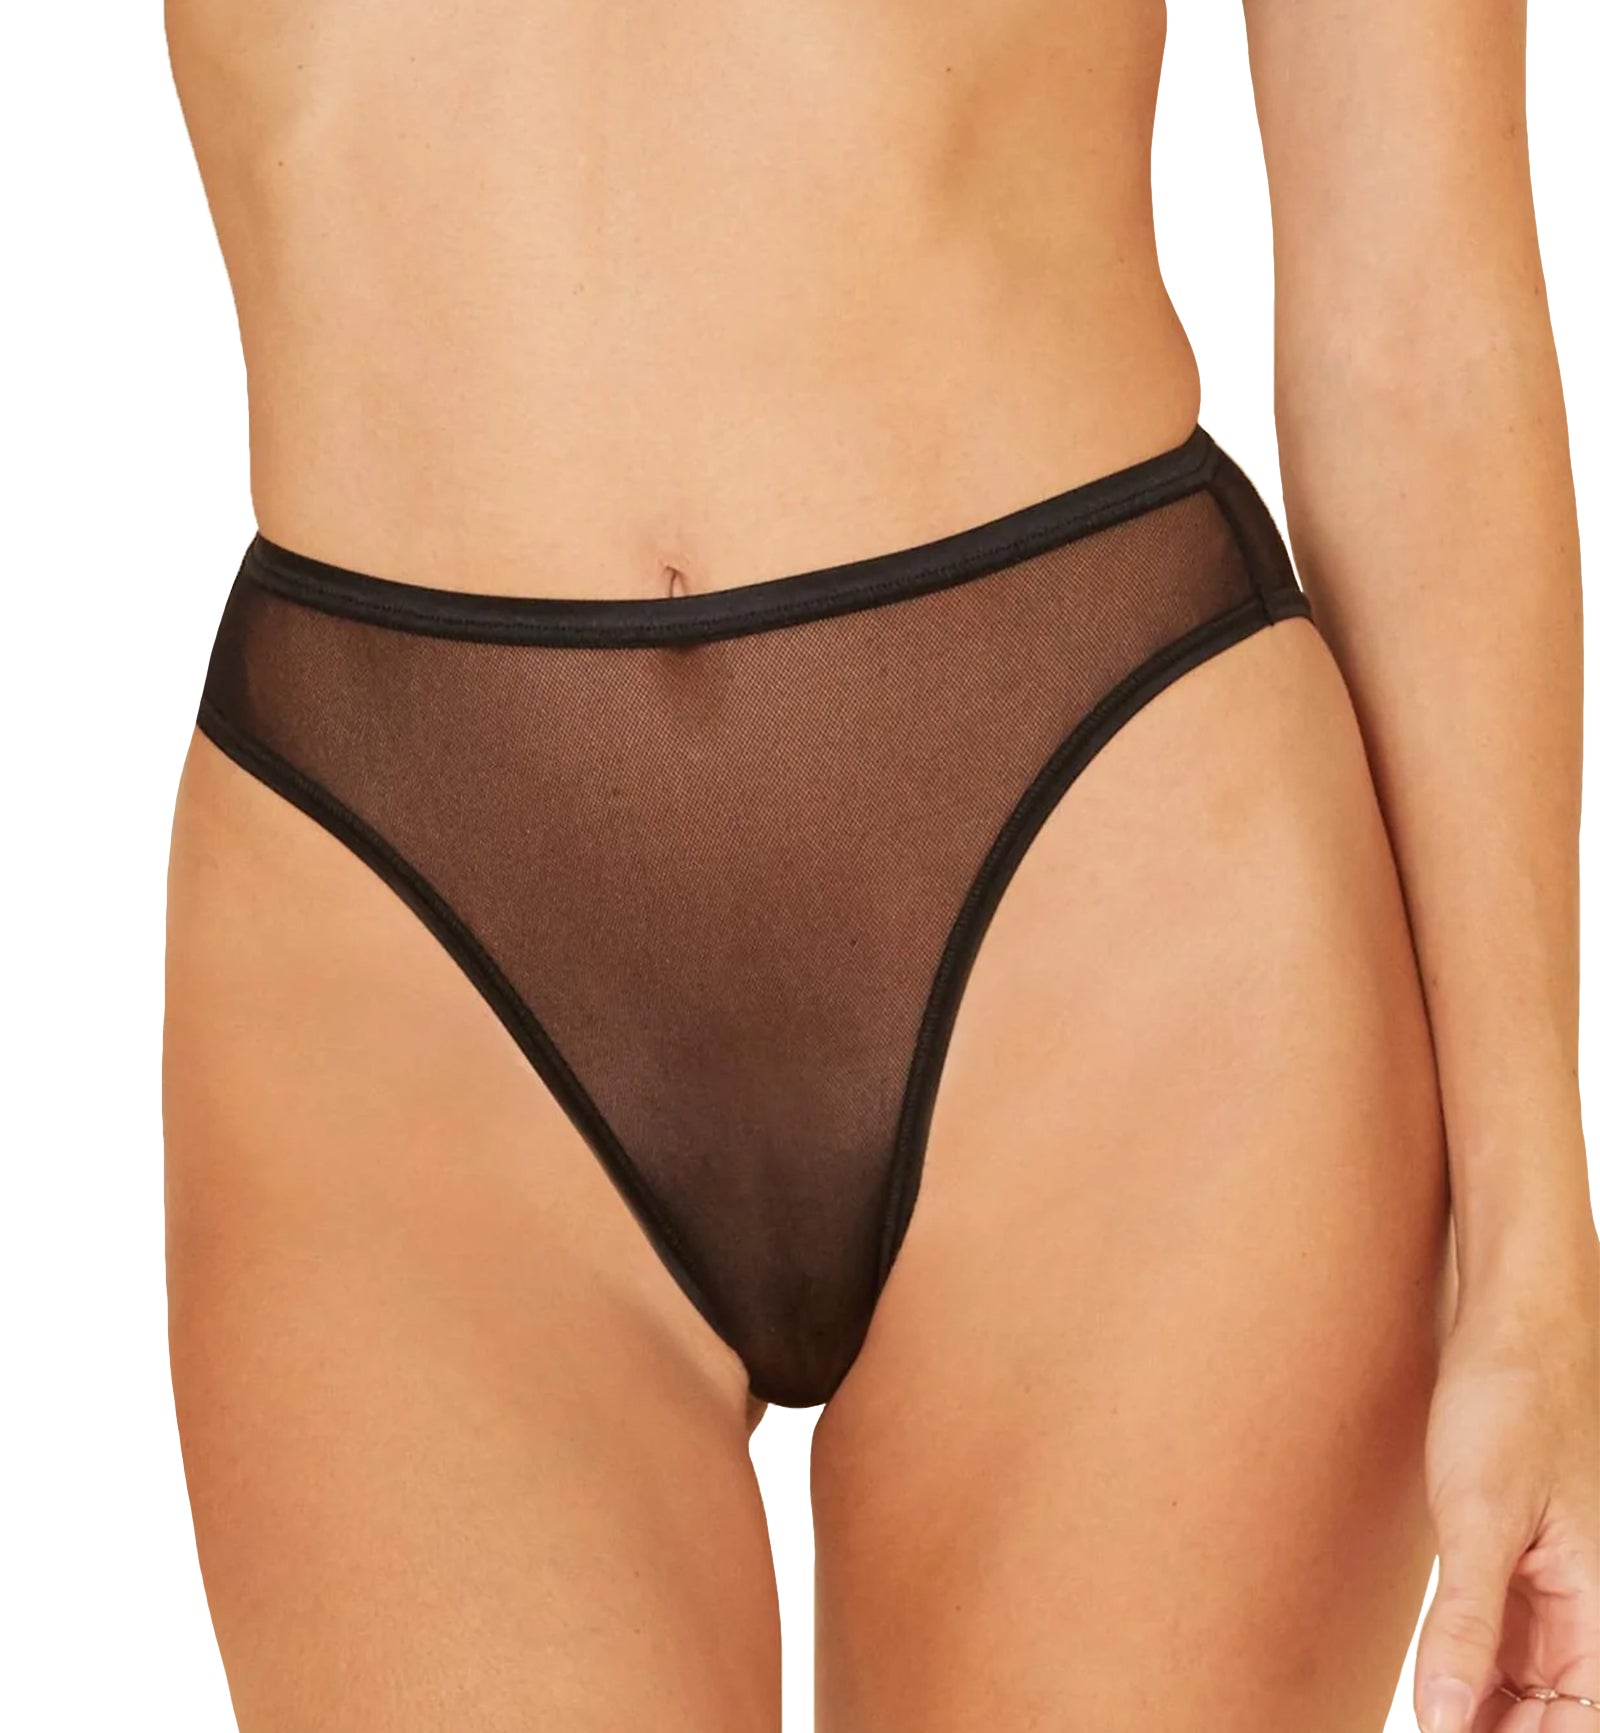 Cosabella Soire Confidence High Waist Bikini Panty (SOIRC0561),Small,Black - Black,Small